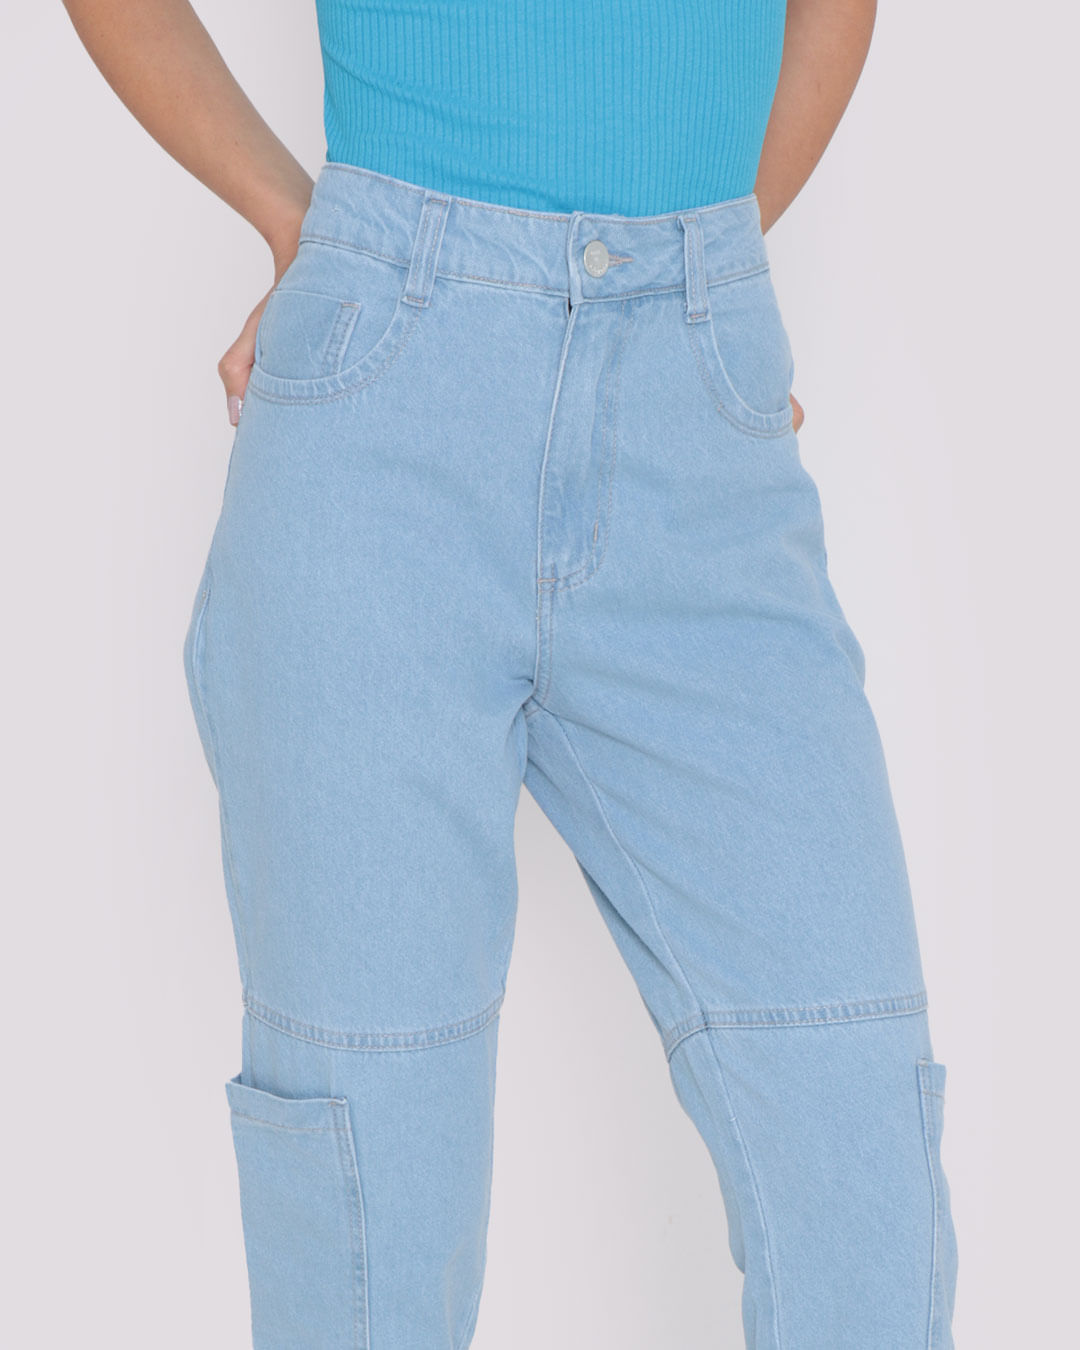 Calca-Jeans-Feminina-Biotipo-Cargo-Azul-Claro